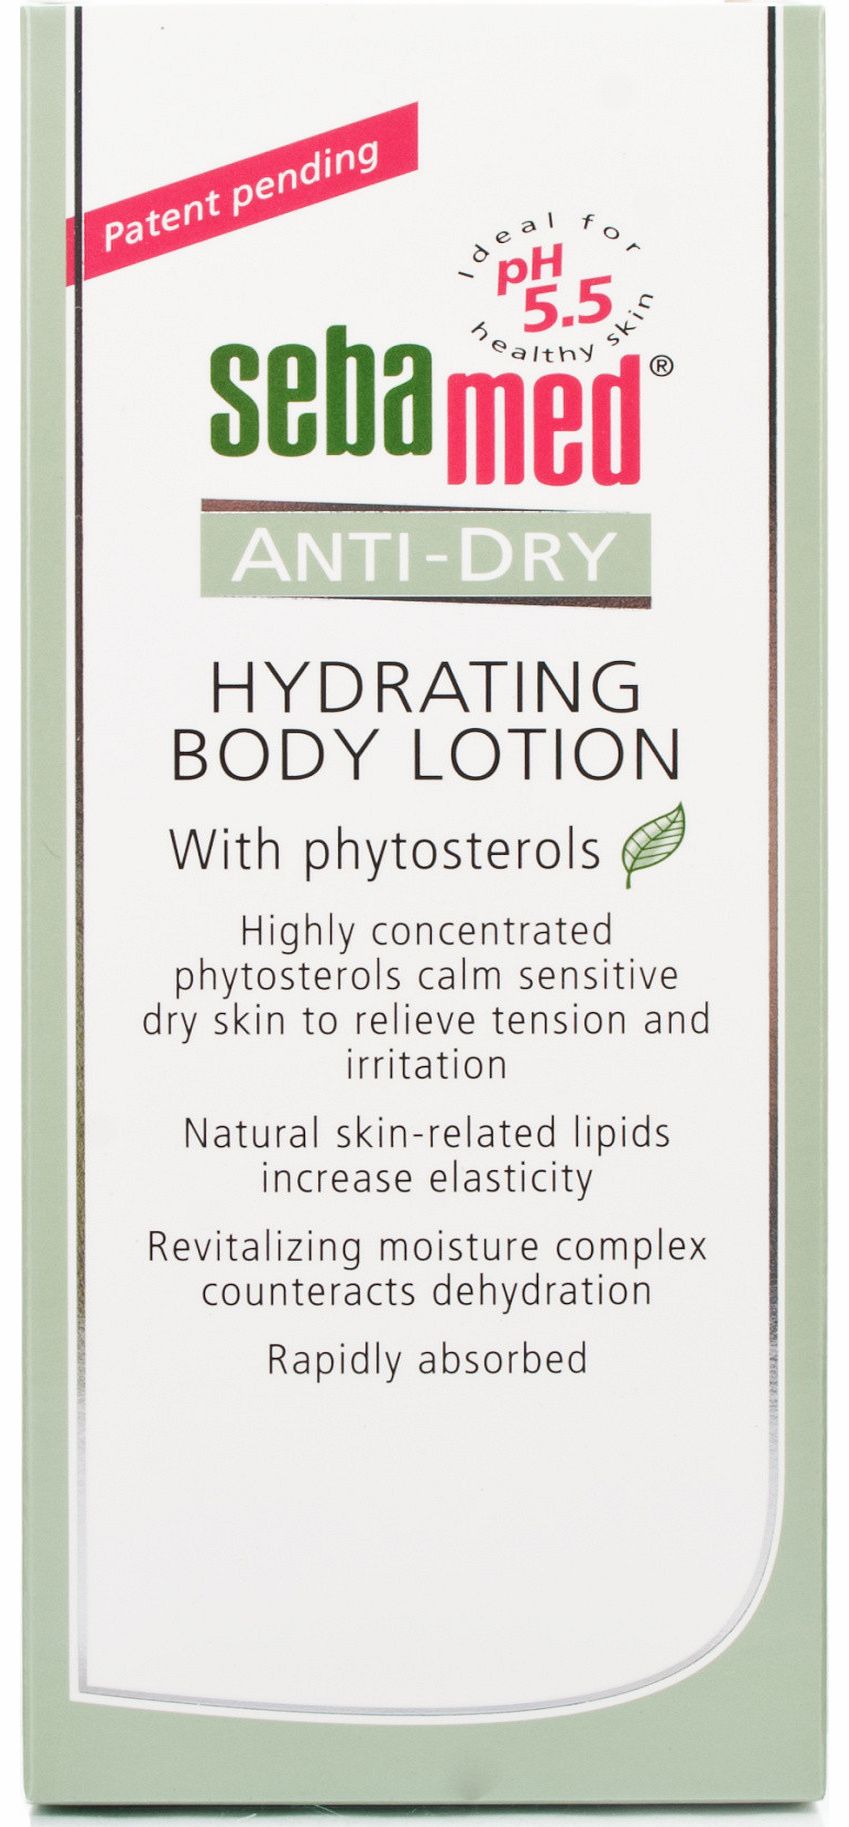 Sebamed Anti-Dry Hydrating Body Lotion